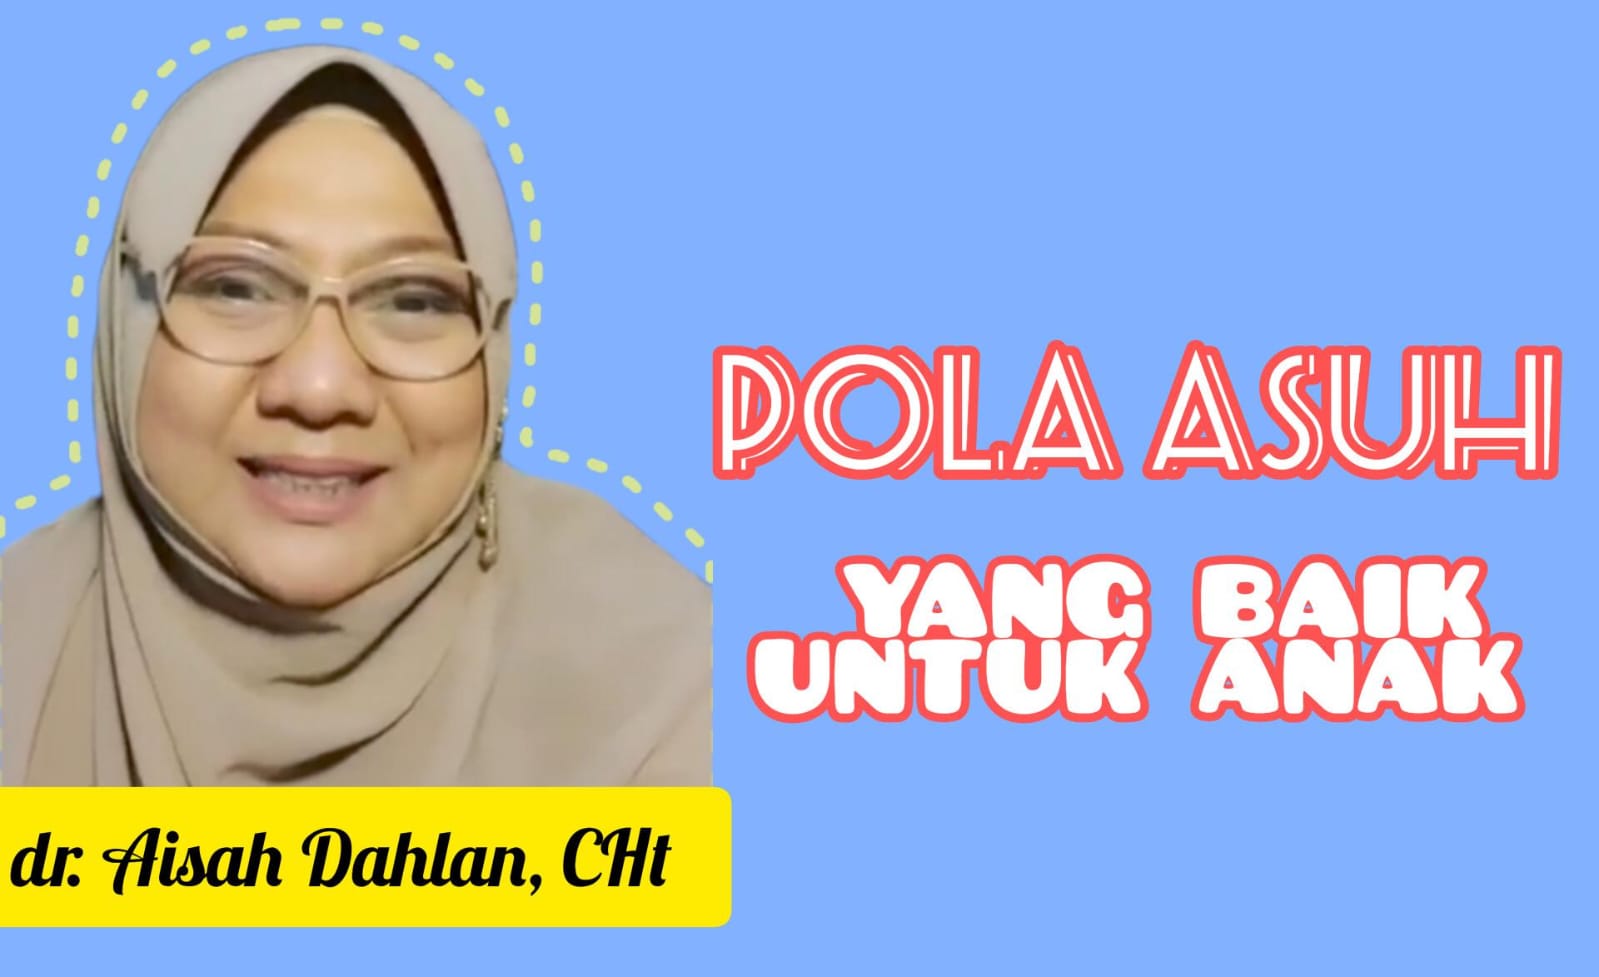 Tips Parenting dr Aisah Dahlan dalam Menanamkan Pola Asuh yang Baik untuk Anak, Jangan sampai Keliru!